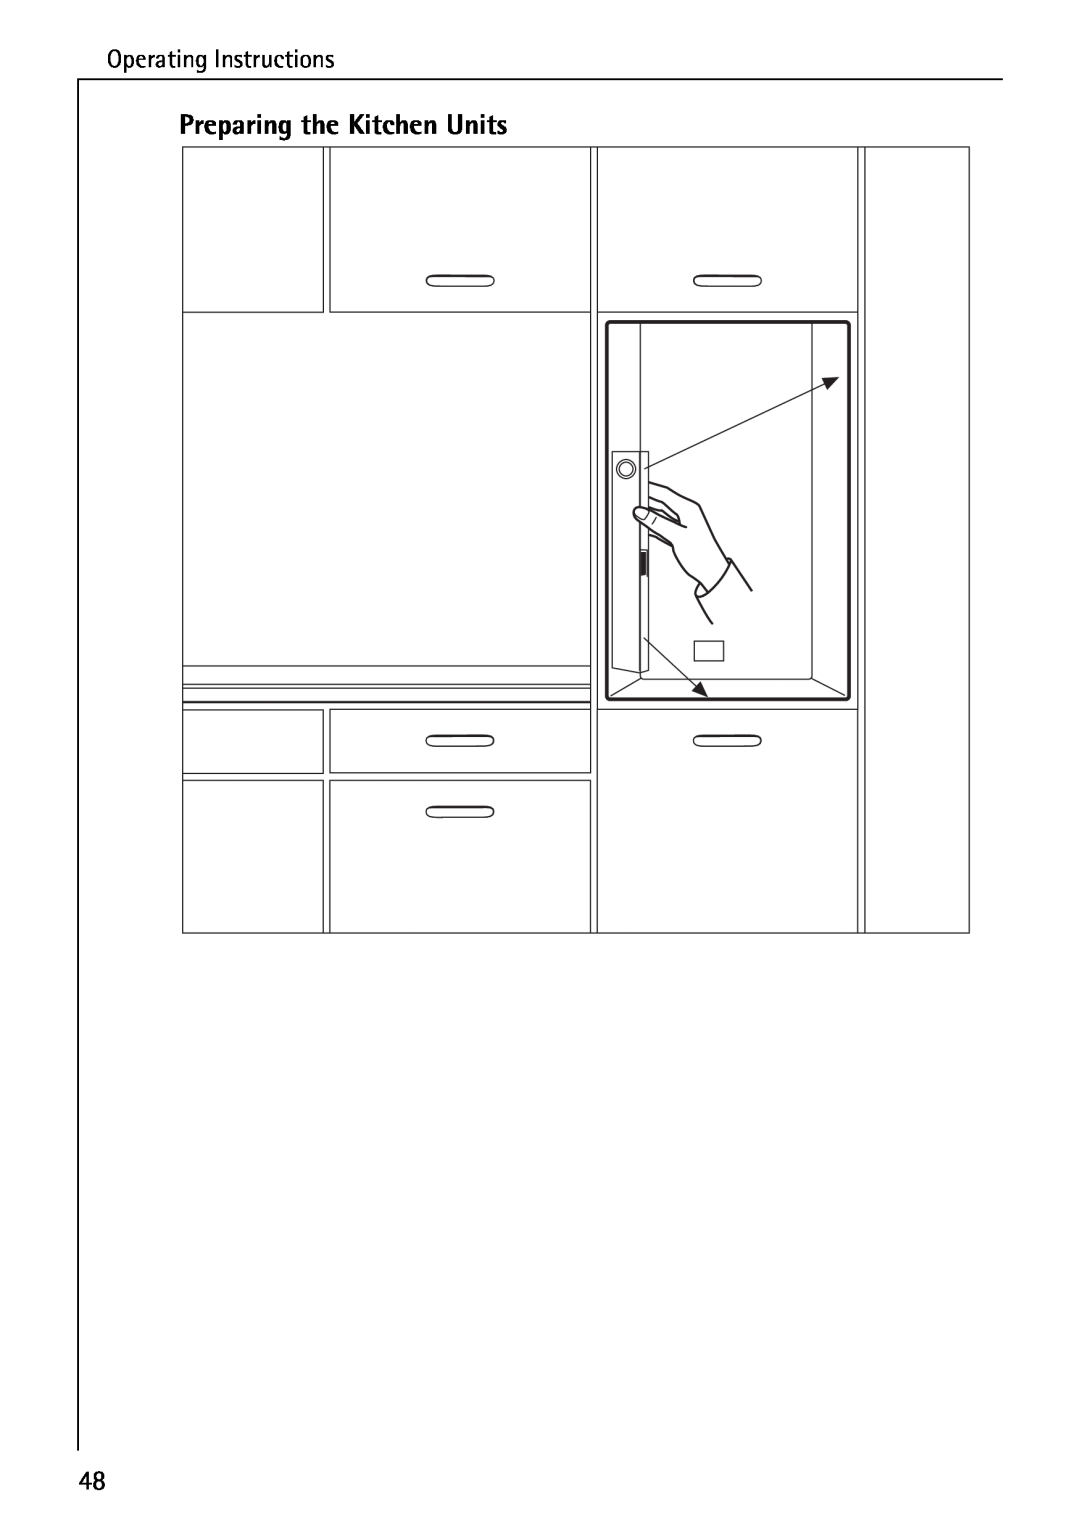 AEG B 4130 manual Preparing the Kitchen Units, Operating Instructions 